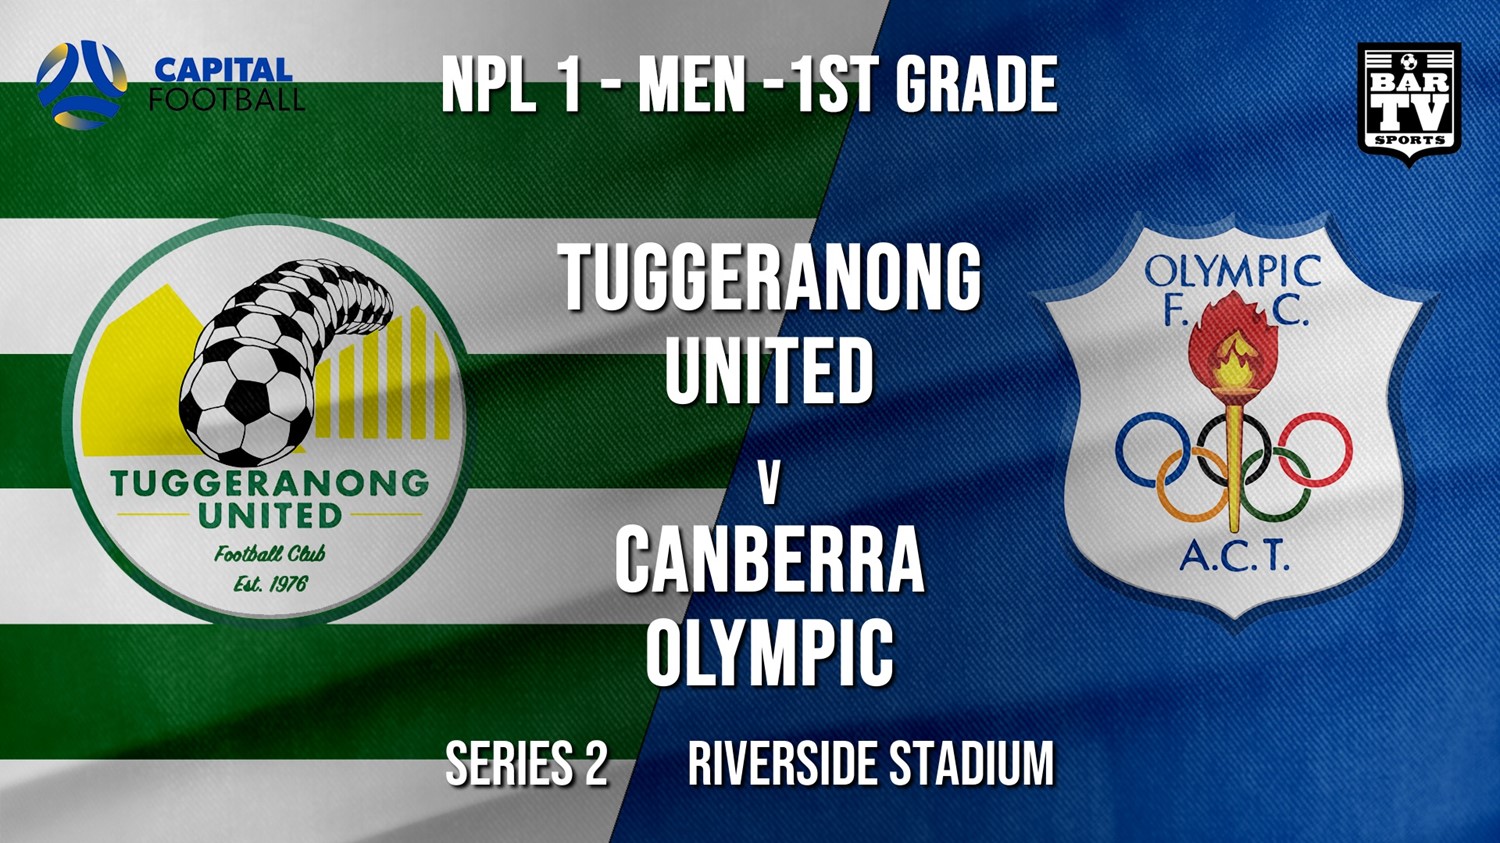 NPL - CAPITAL Series 2 - Tuggeranong United FC v Canberra Olympic FC Minigame Slate Image